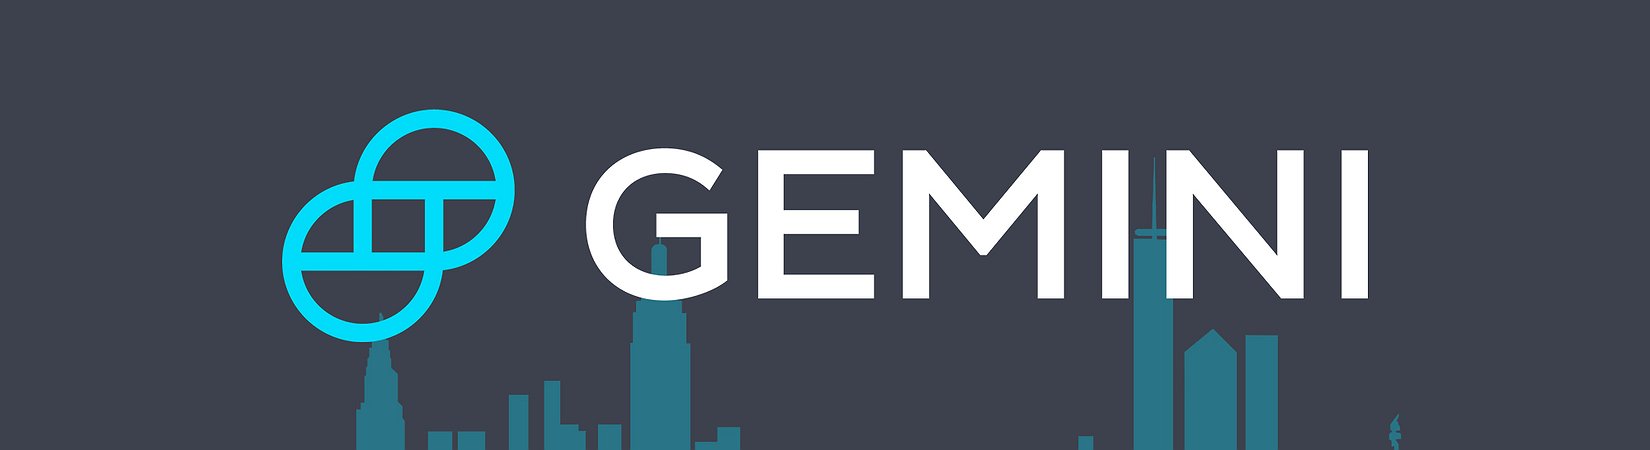 Gemini Wants To Obtain Broker Dealer License News Ihodl Com - 